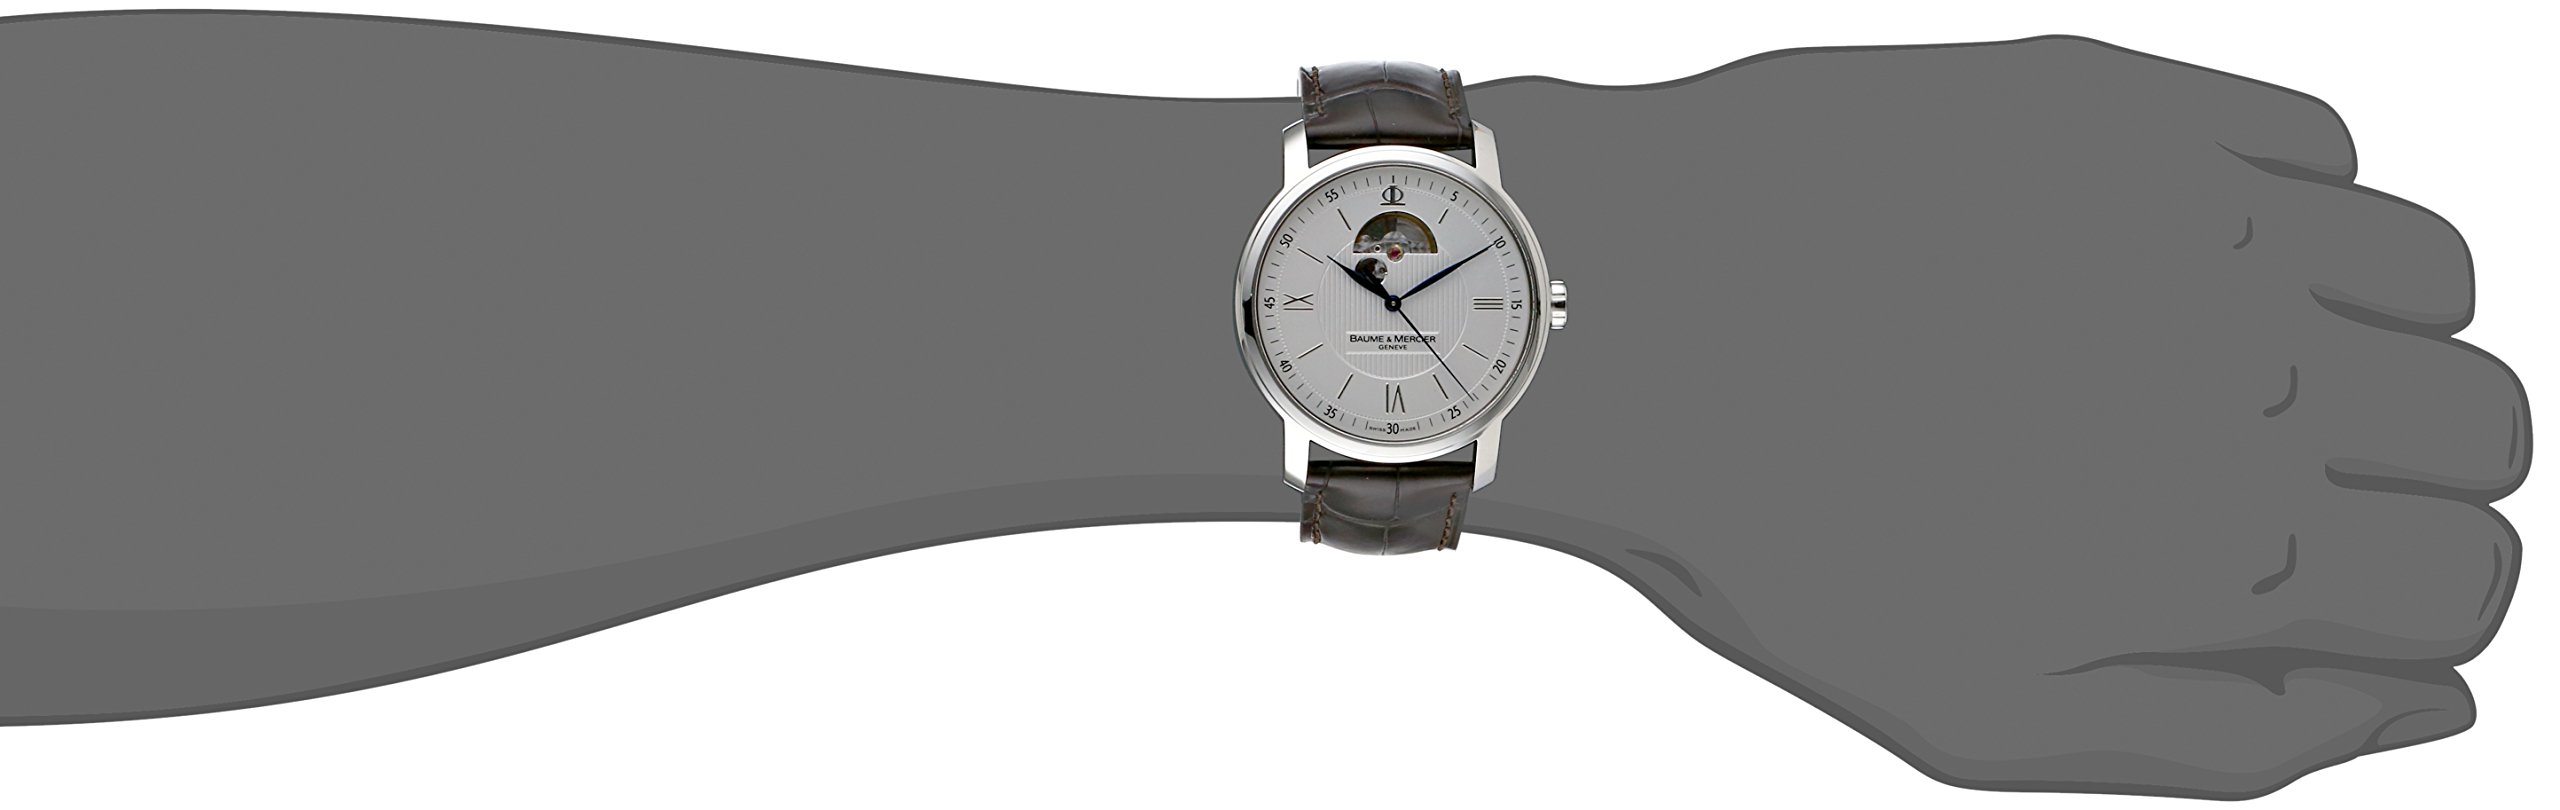 Baume & Mercier Men's 8688 Classima Executives Automatic Silver Dial Watch